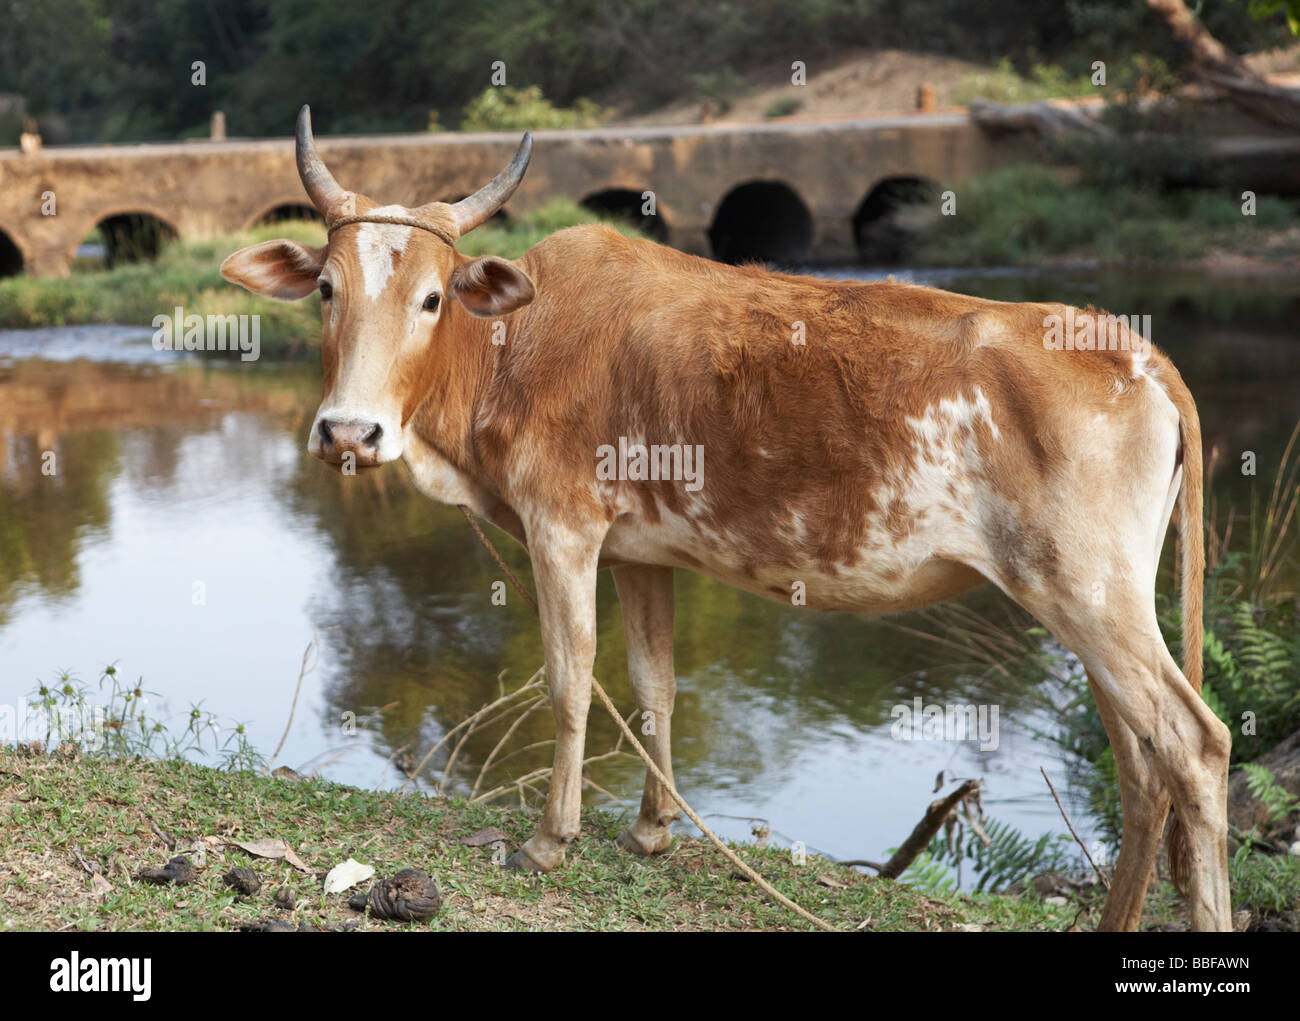 Sacred Cow Kerala India Stock Photo